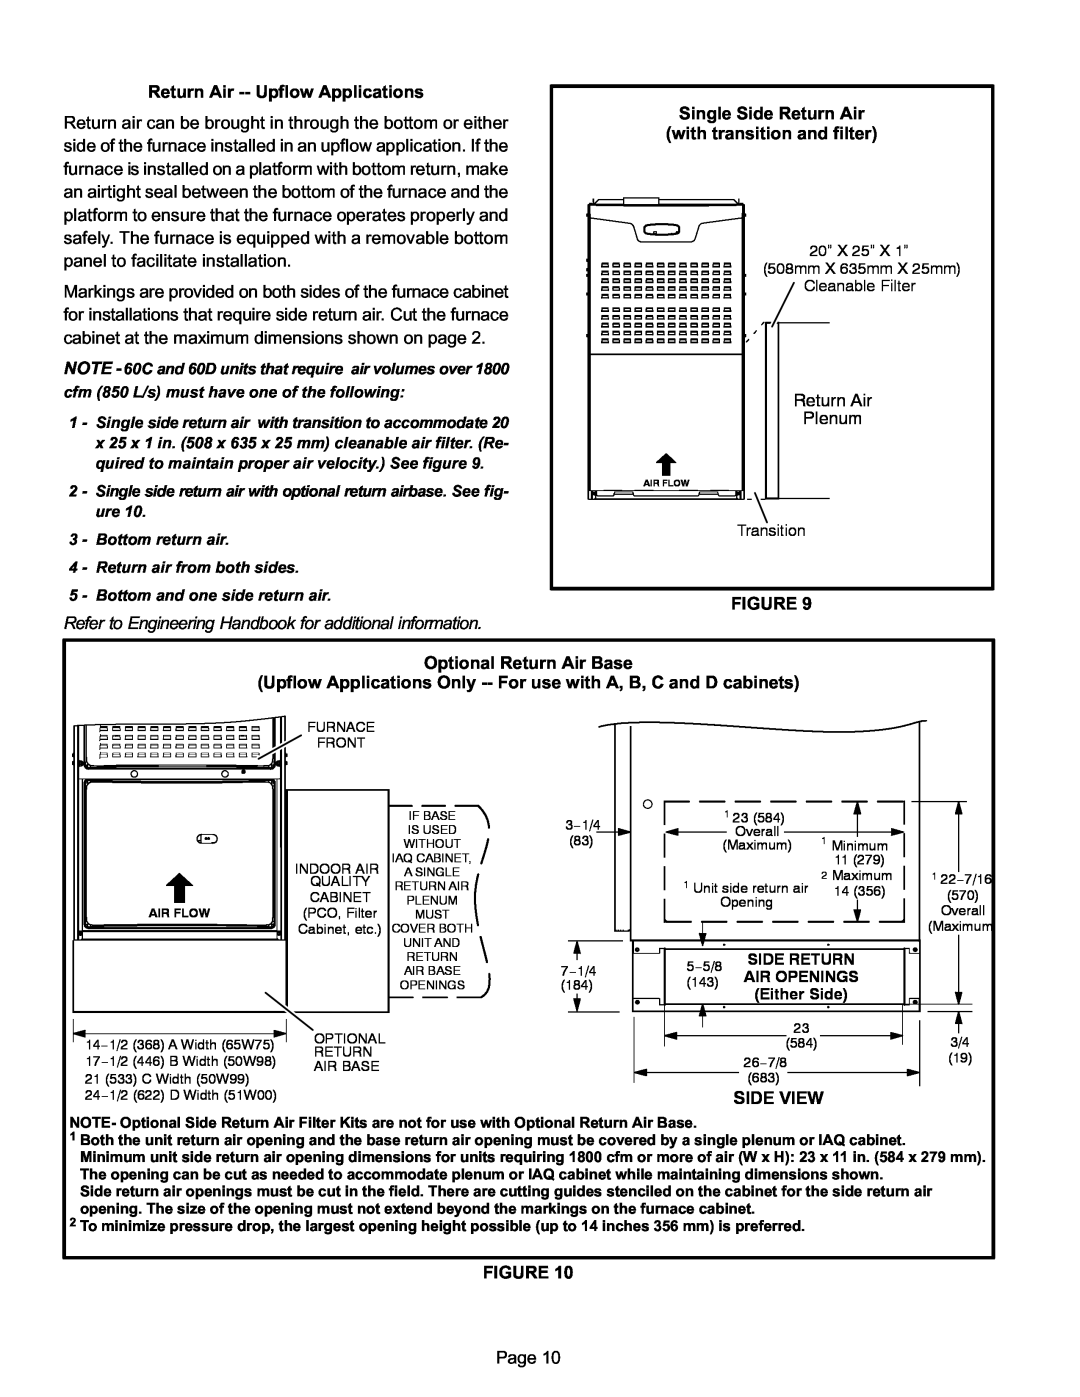 Lennox International Inc Merit Series Gas Furnace installation instructions Return Air −− Upflow Applications, Side View 